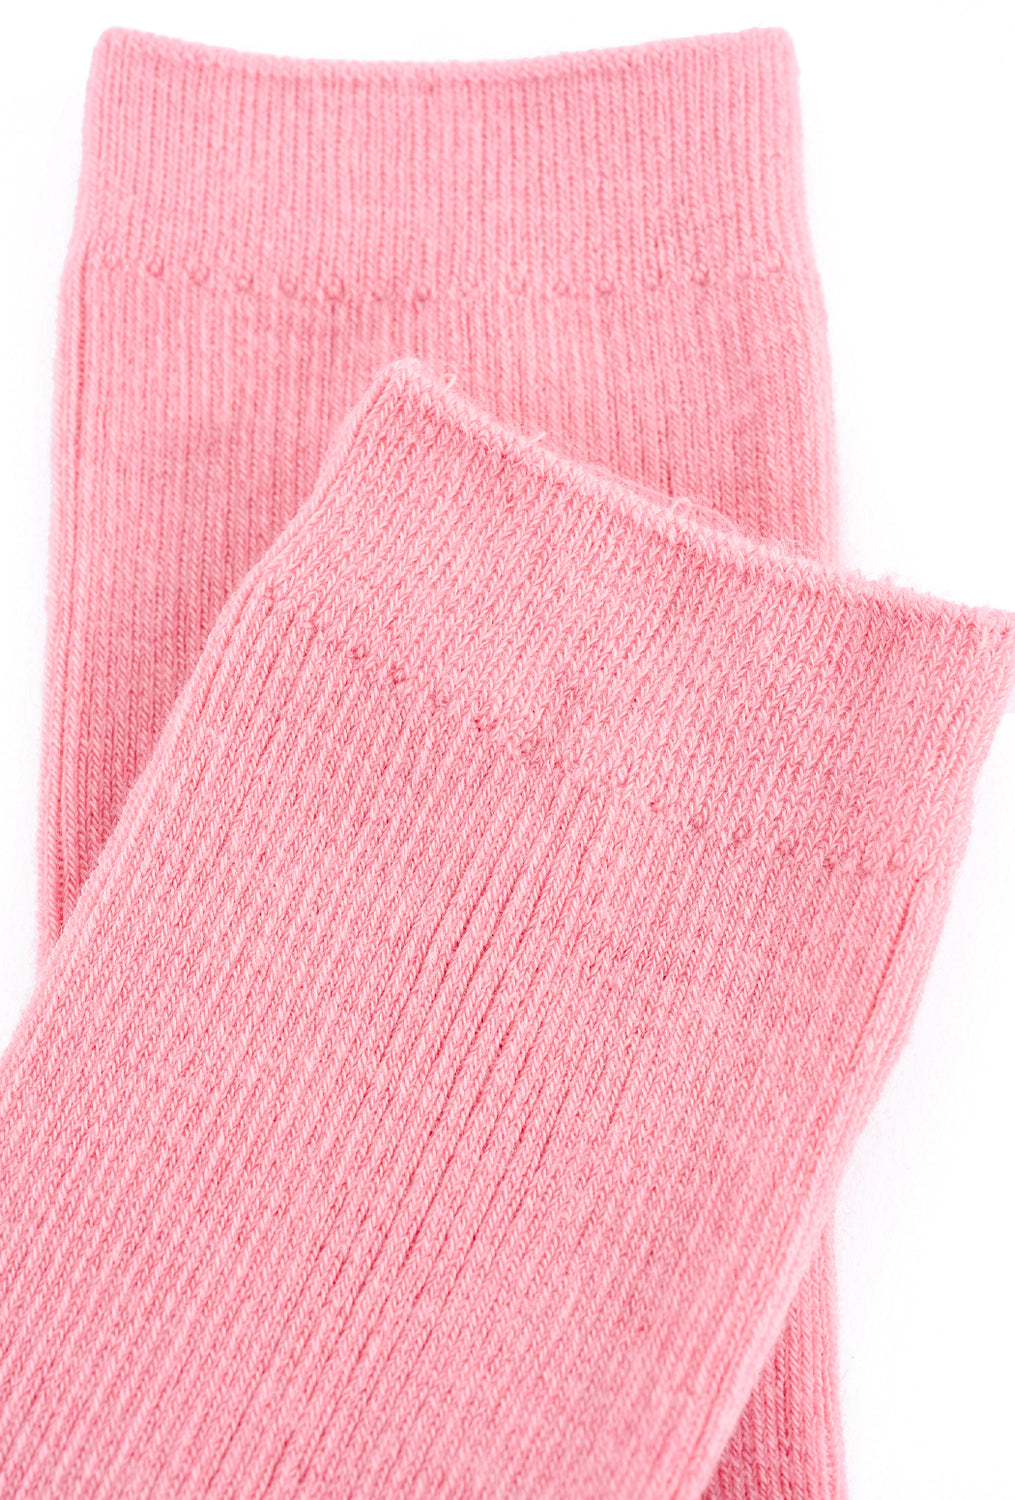 Hooray Sock Co. Everyday Wool Socks, Blush 